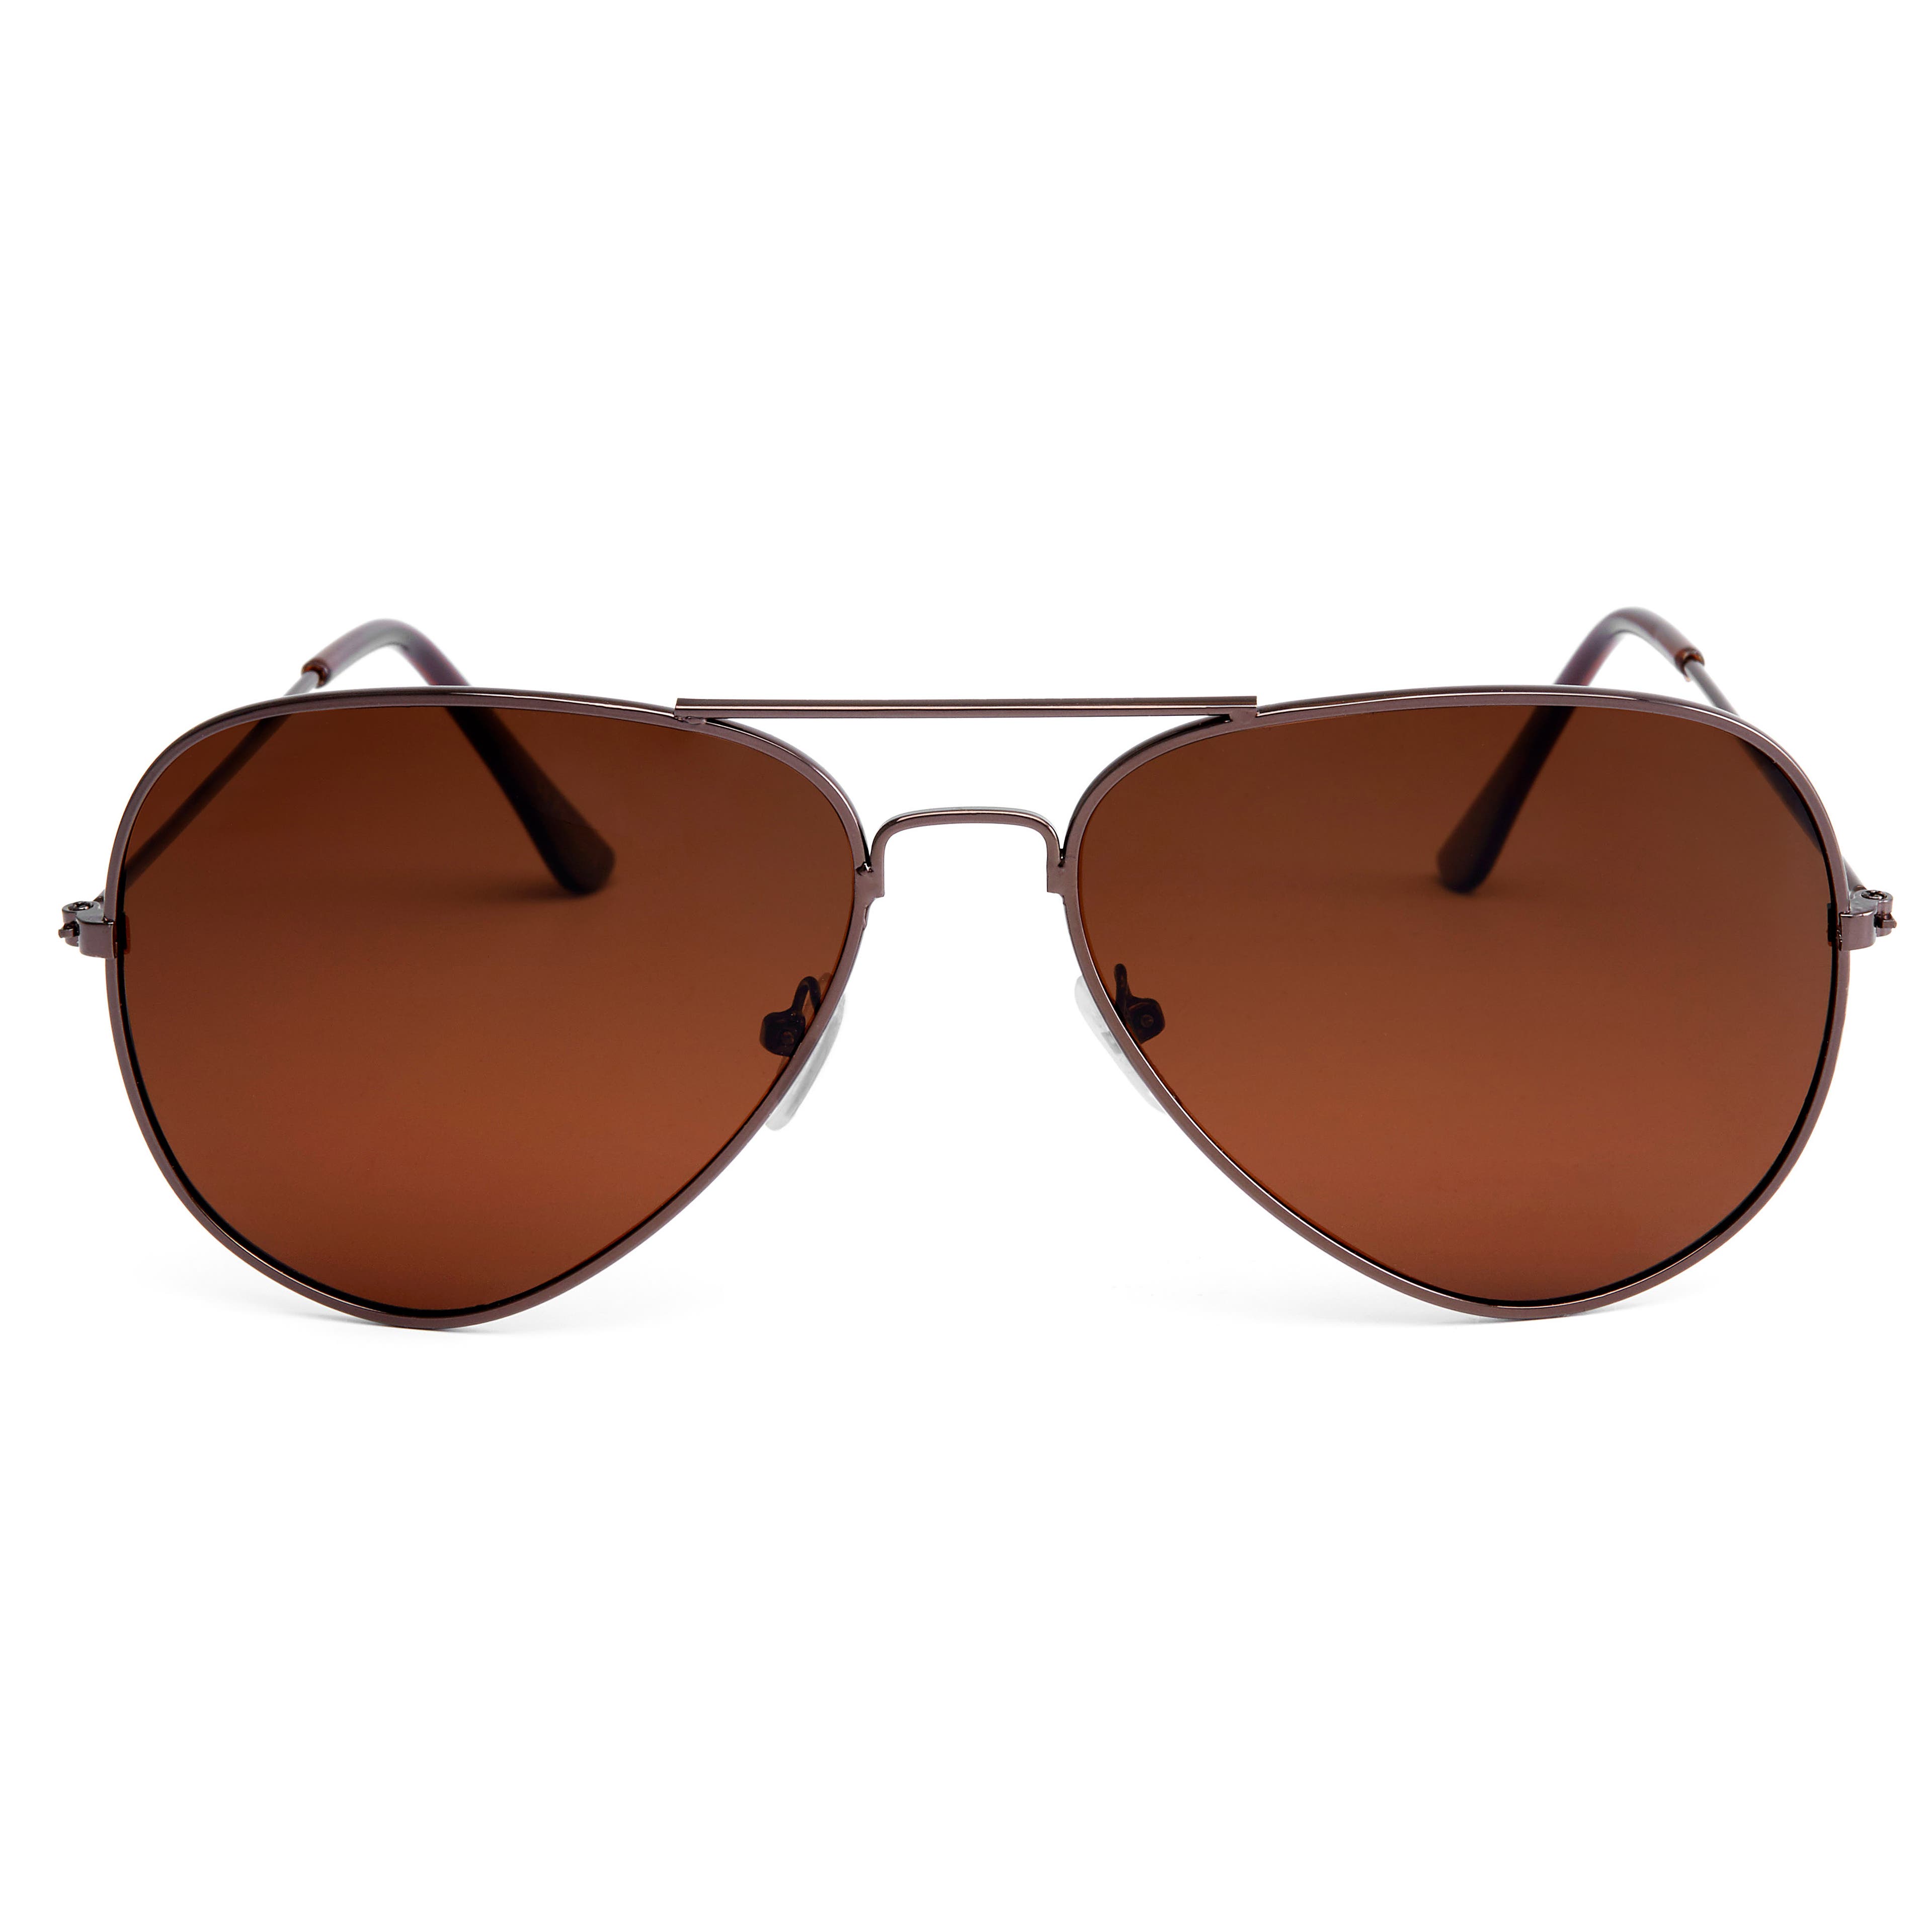 Поляризирани авиаторски слънчеви очила в кафяво